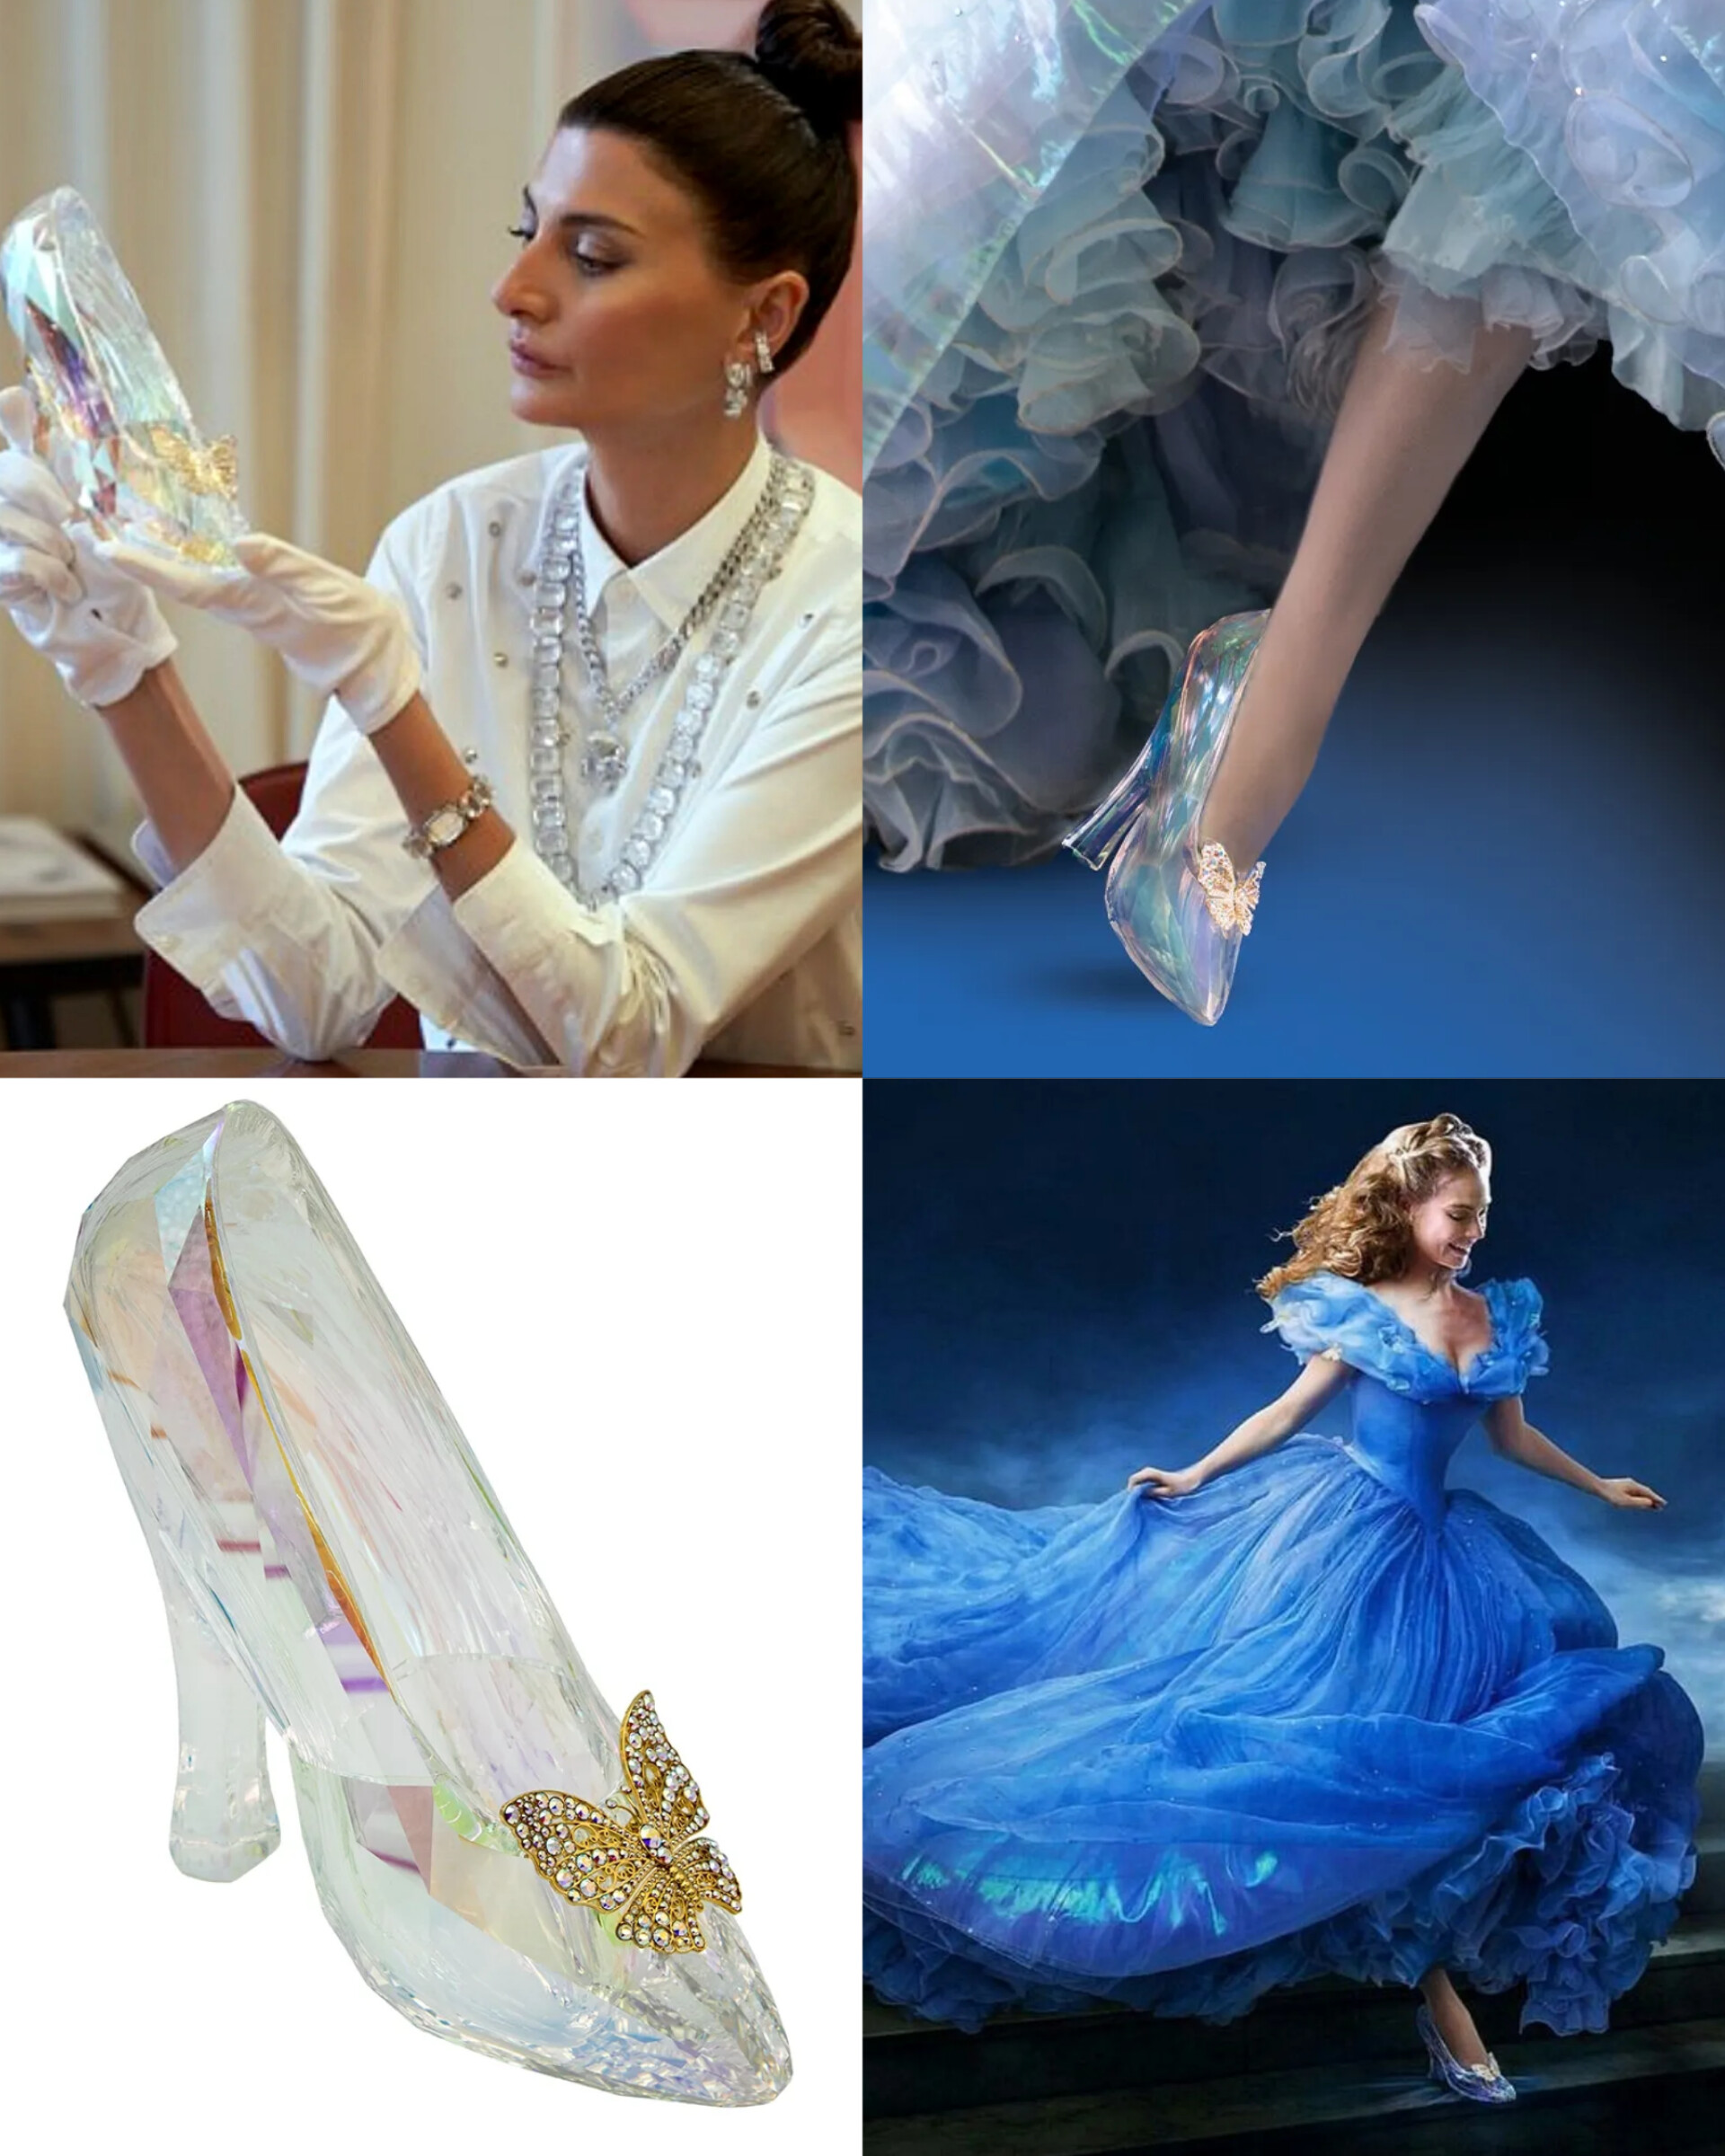 Swarovski glass slipper of Cinderella for Disney 100